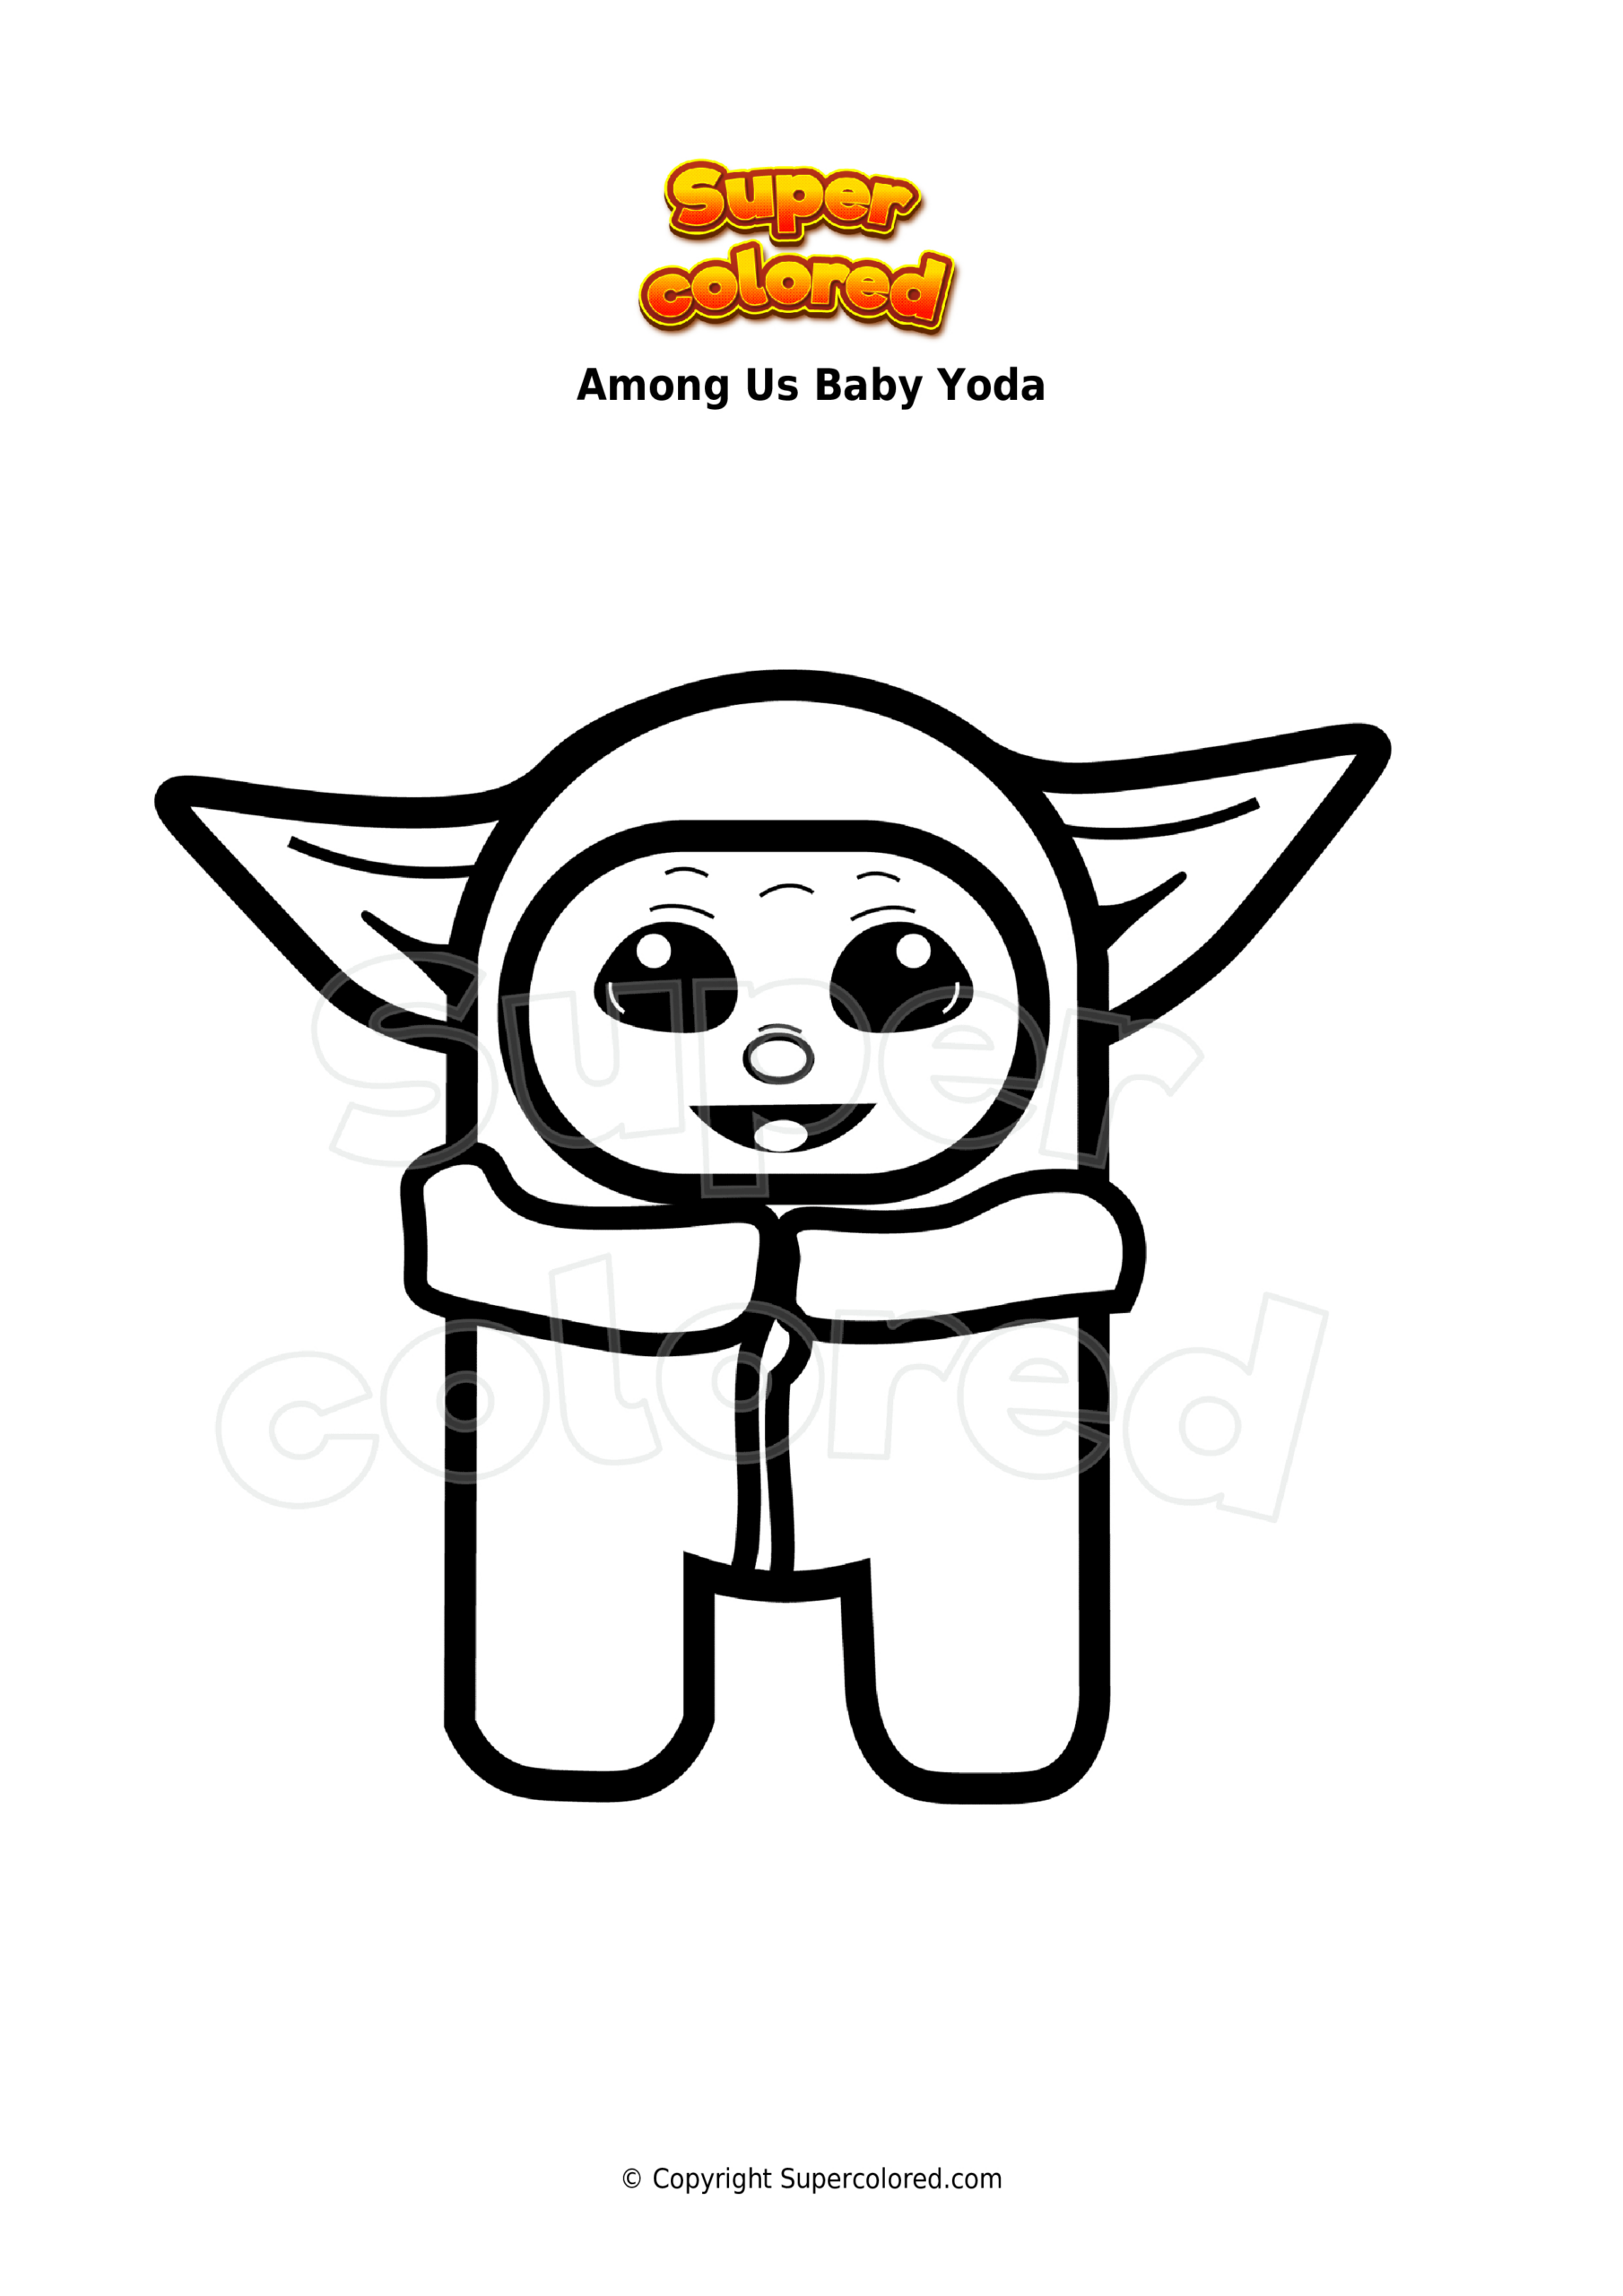 Coloriage Among Us Baby Yoda - Supercolored concernant Coloriage Bebe Yoda